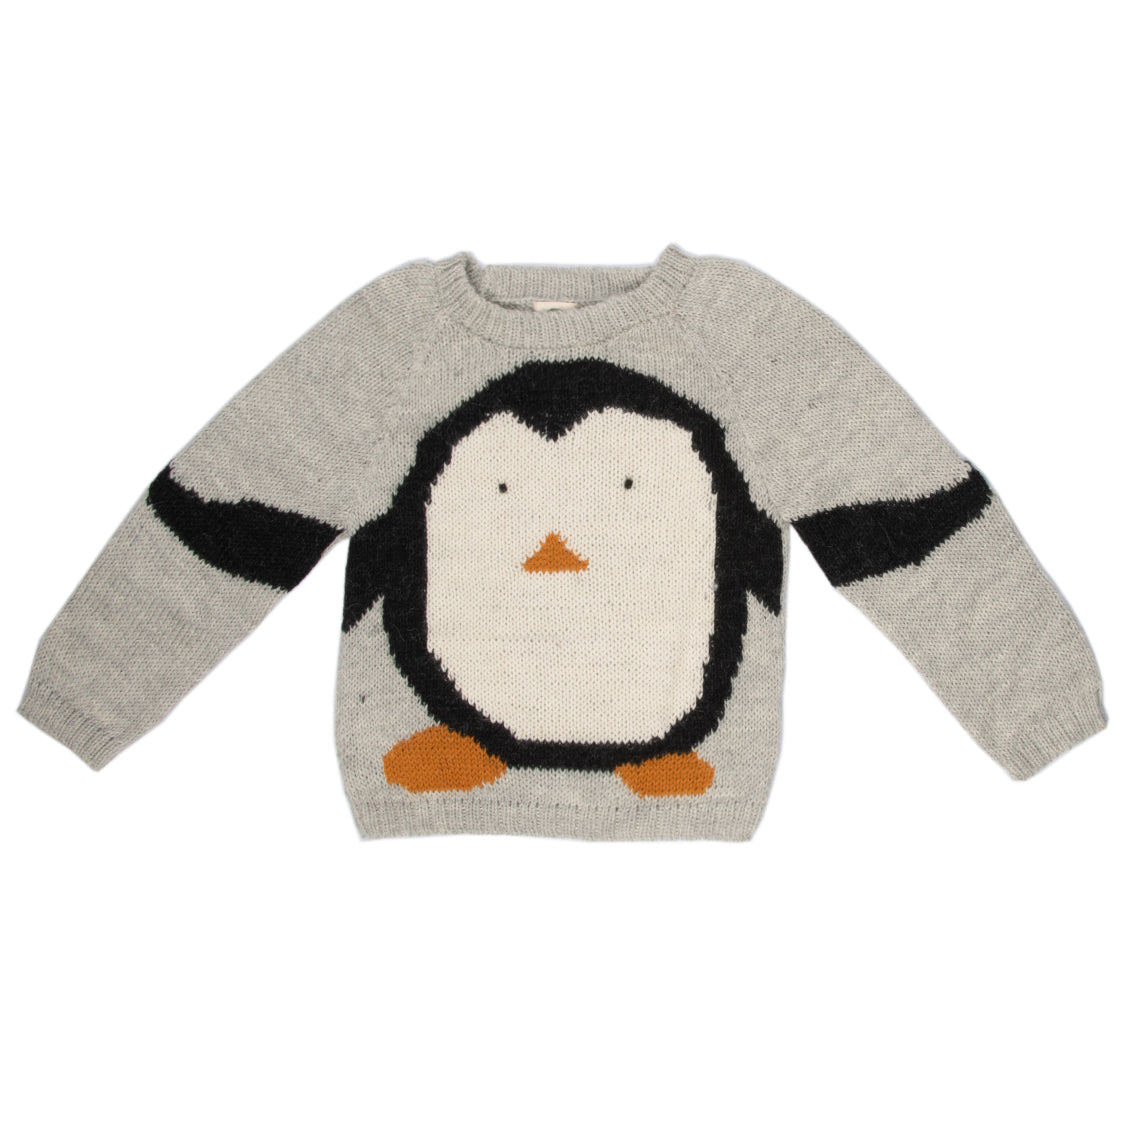 Cute Animals - Penguin sweater in grey - Jiajia Doll